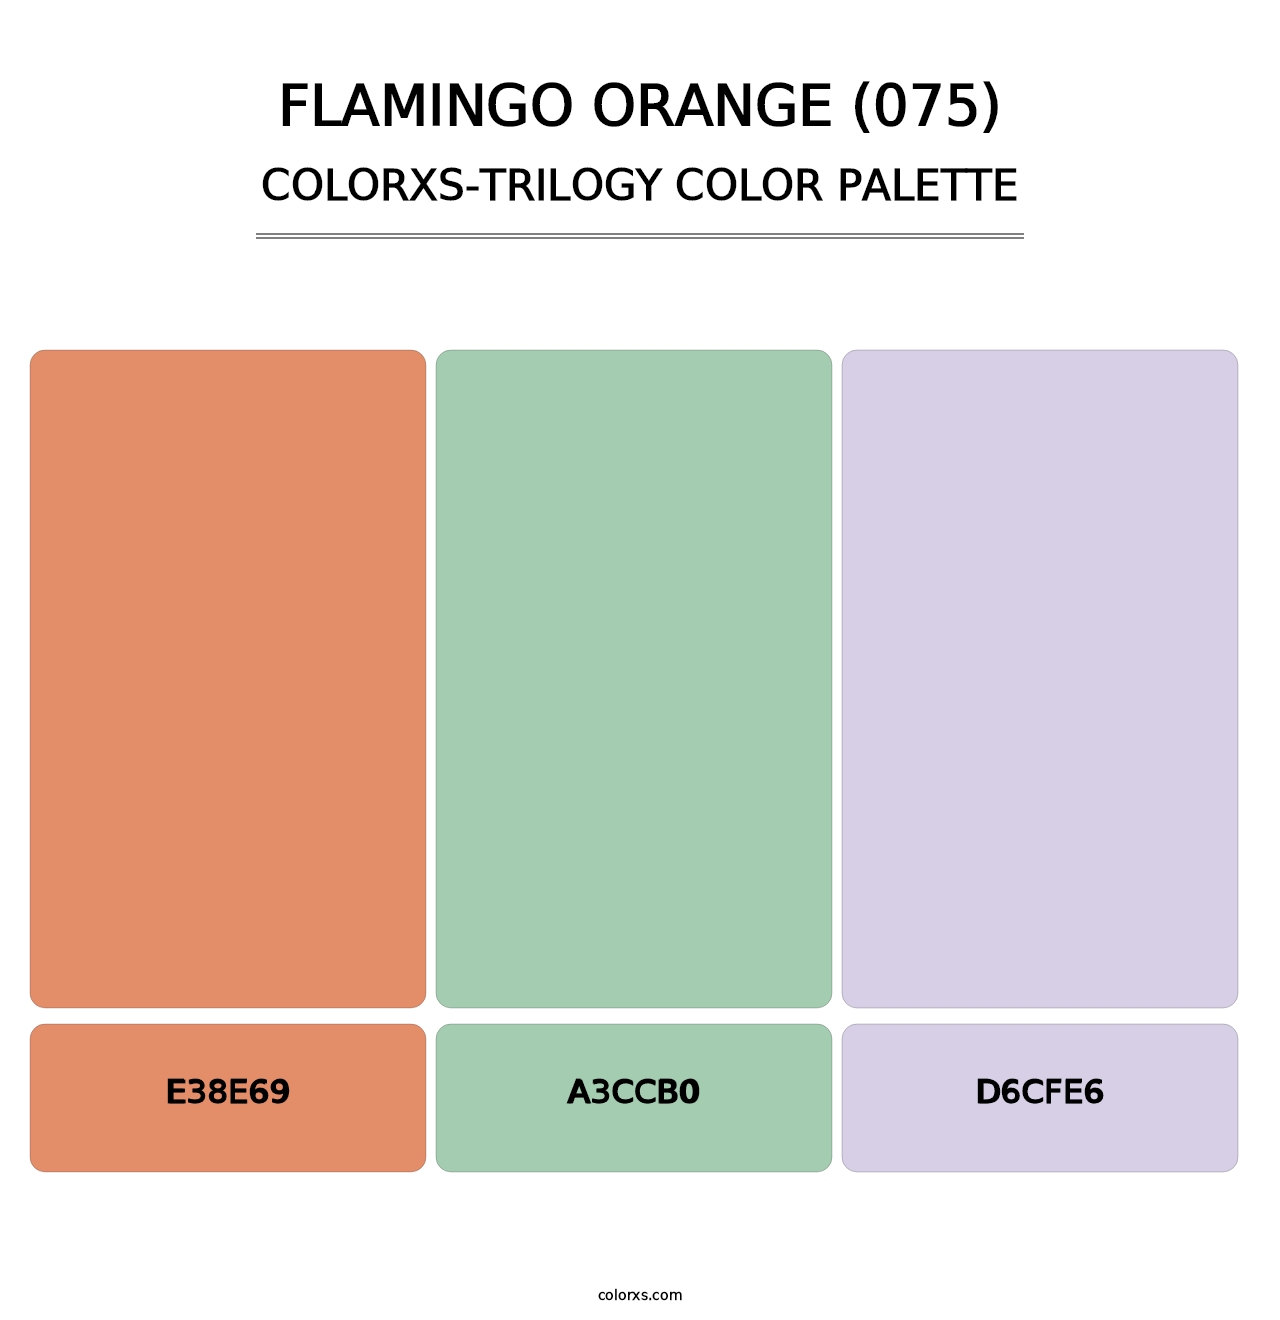 Flamingo Orange (075) - Colorxs Trilogy Palette